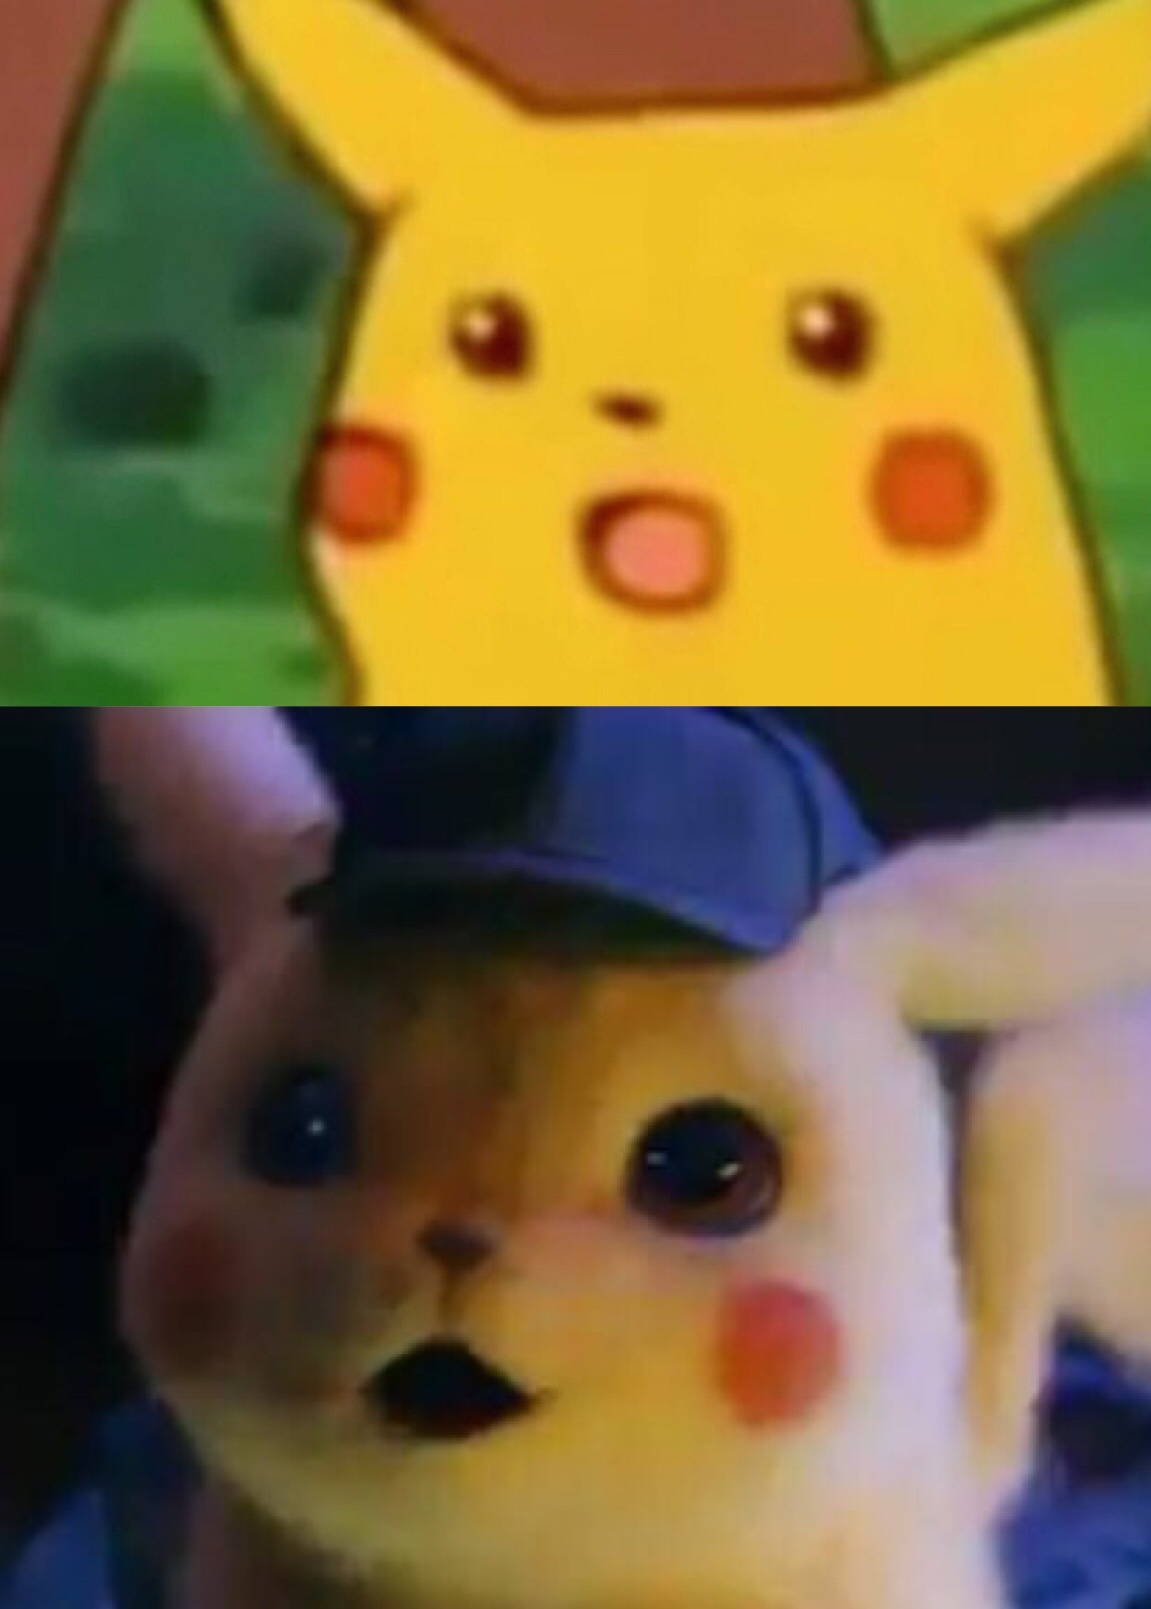 Enjoy the meme 'close enough. (a new movie: Detective Pikachu' up...